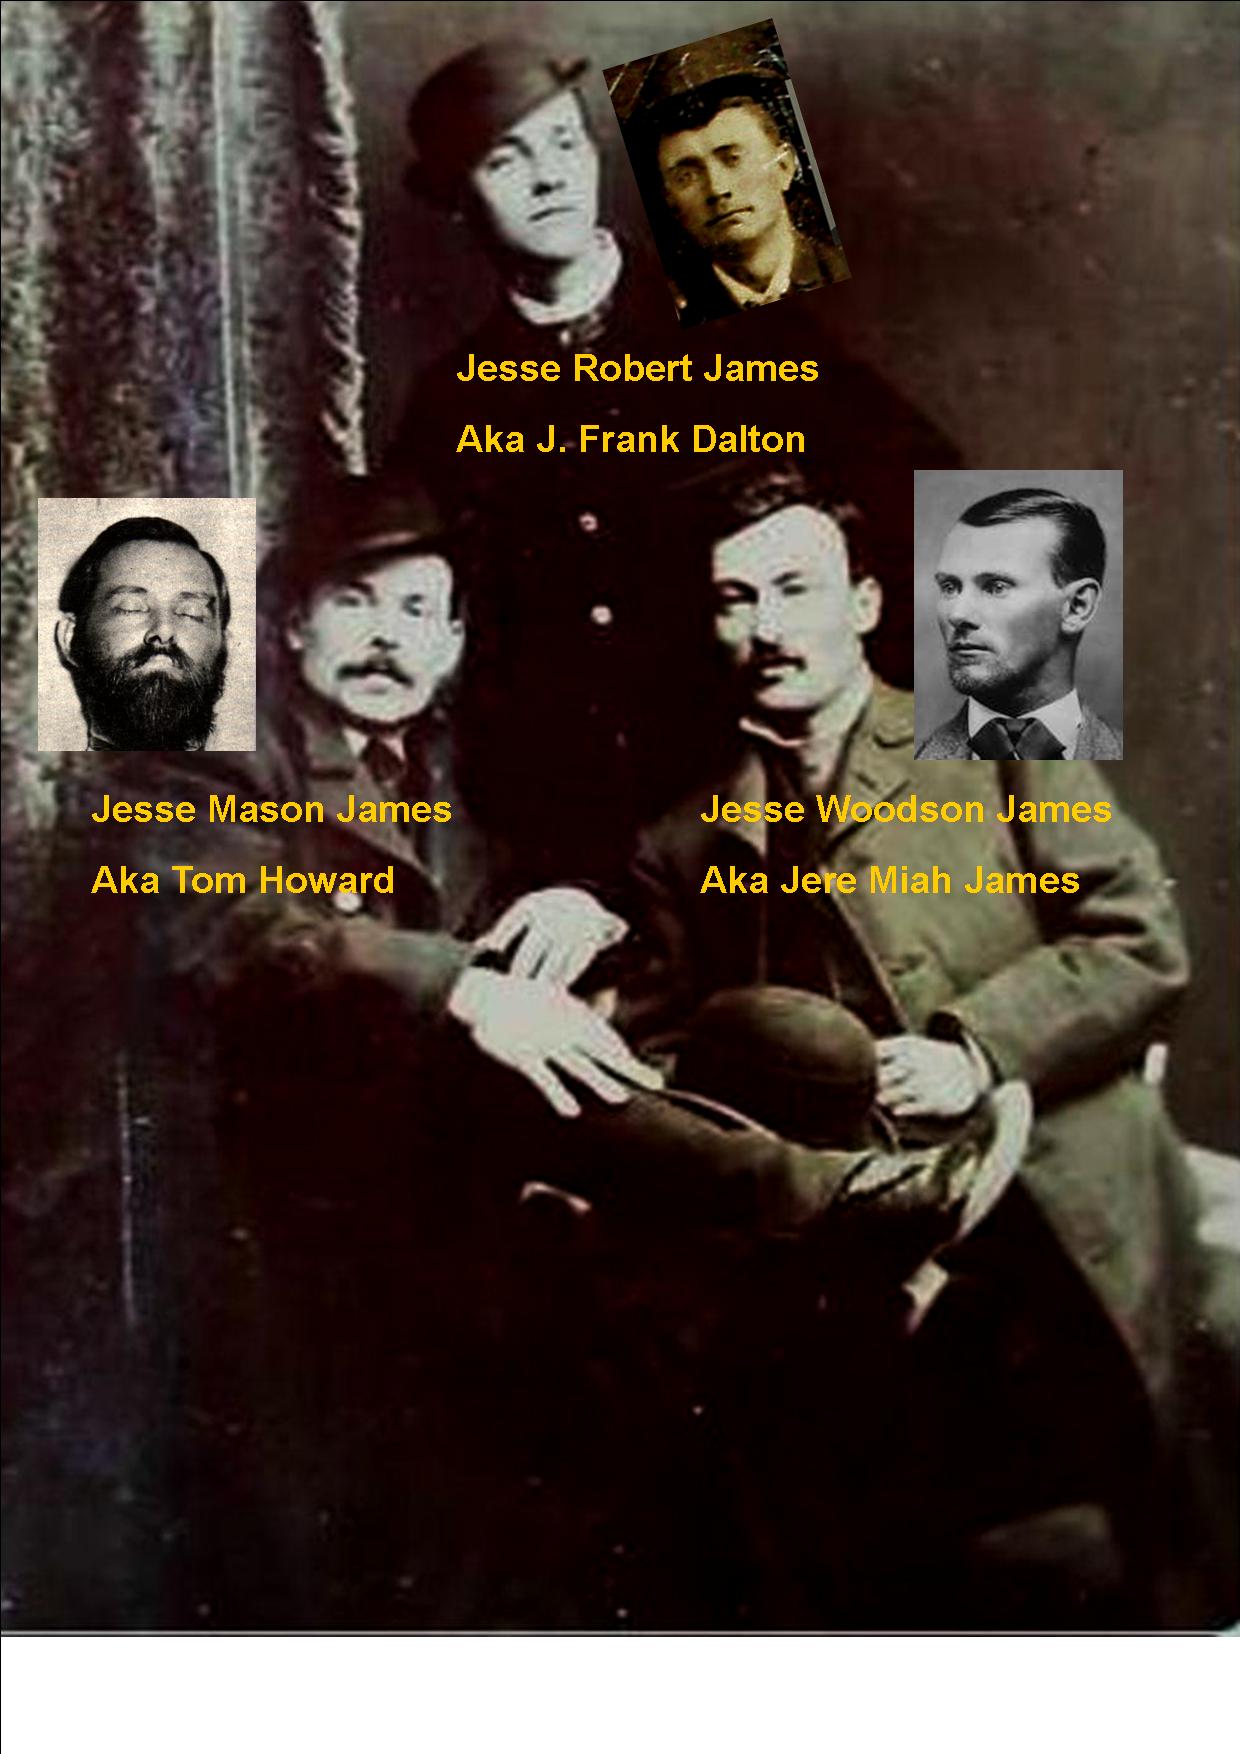 Three cousins named Jesse James